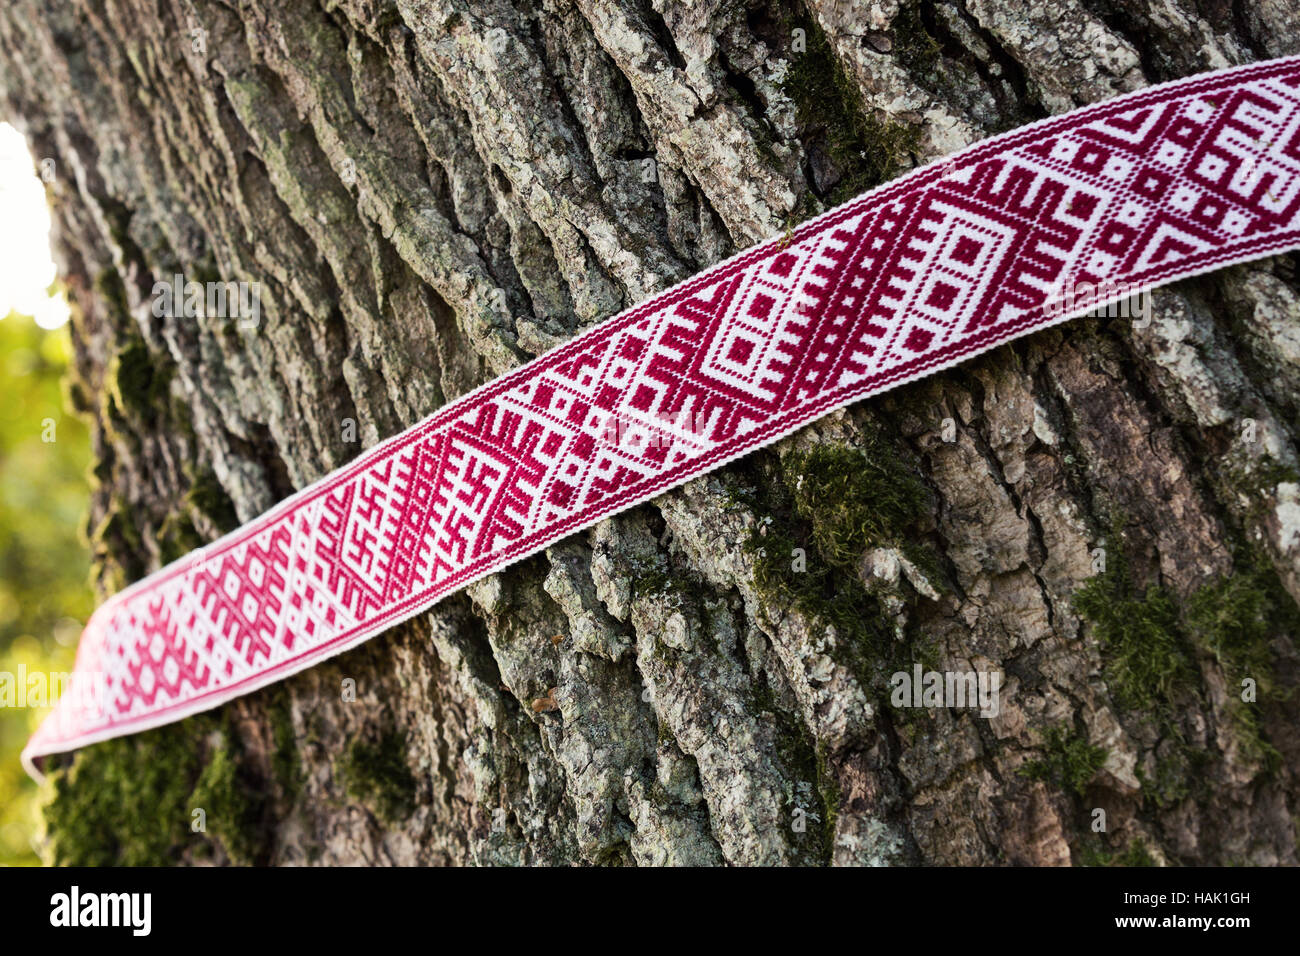 National symbols of Latvia - Lielvarde belt around the tree Stock Photo